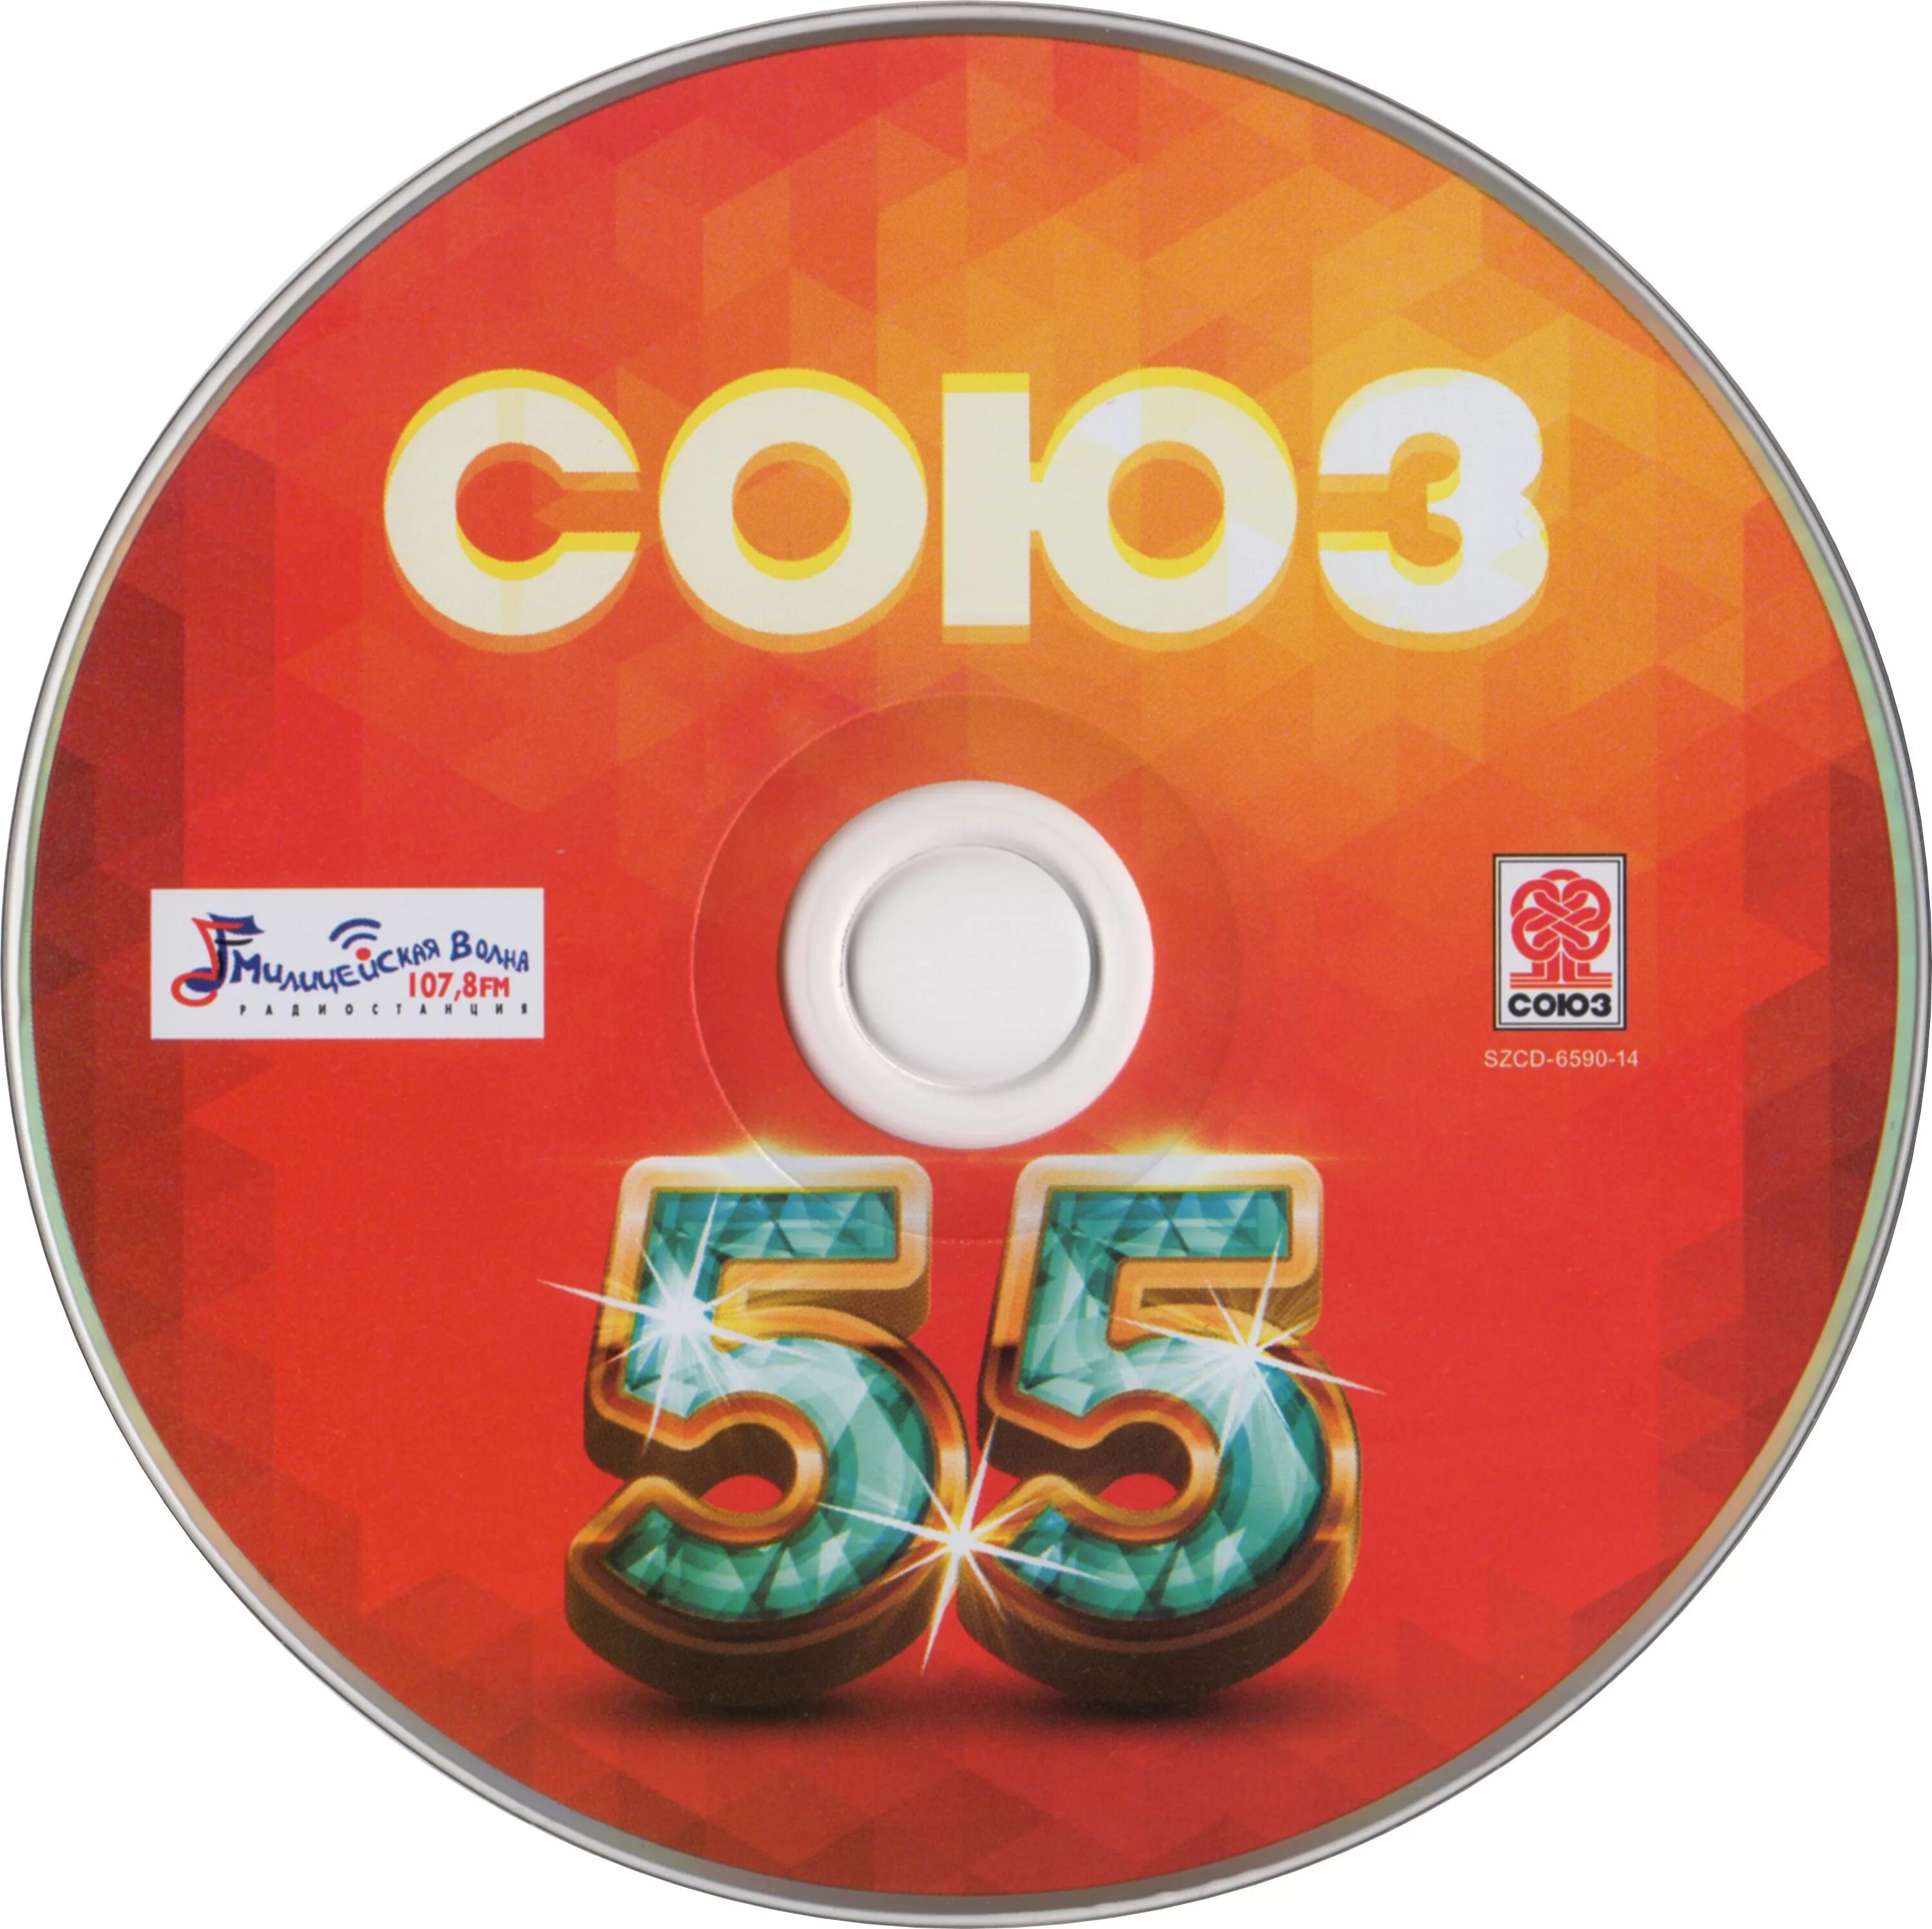 Союз DVD. Диск Союз. CD диск Союз. Союз 55 диск.